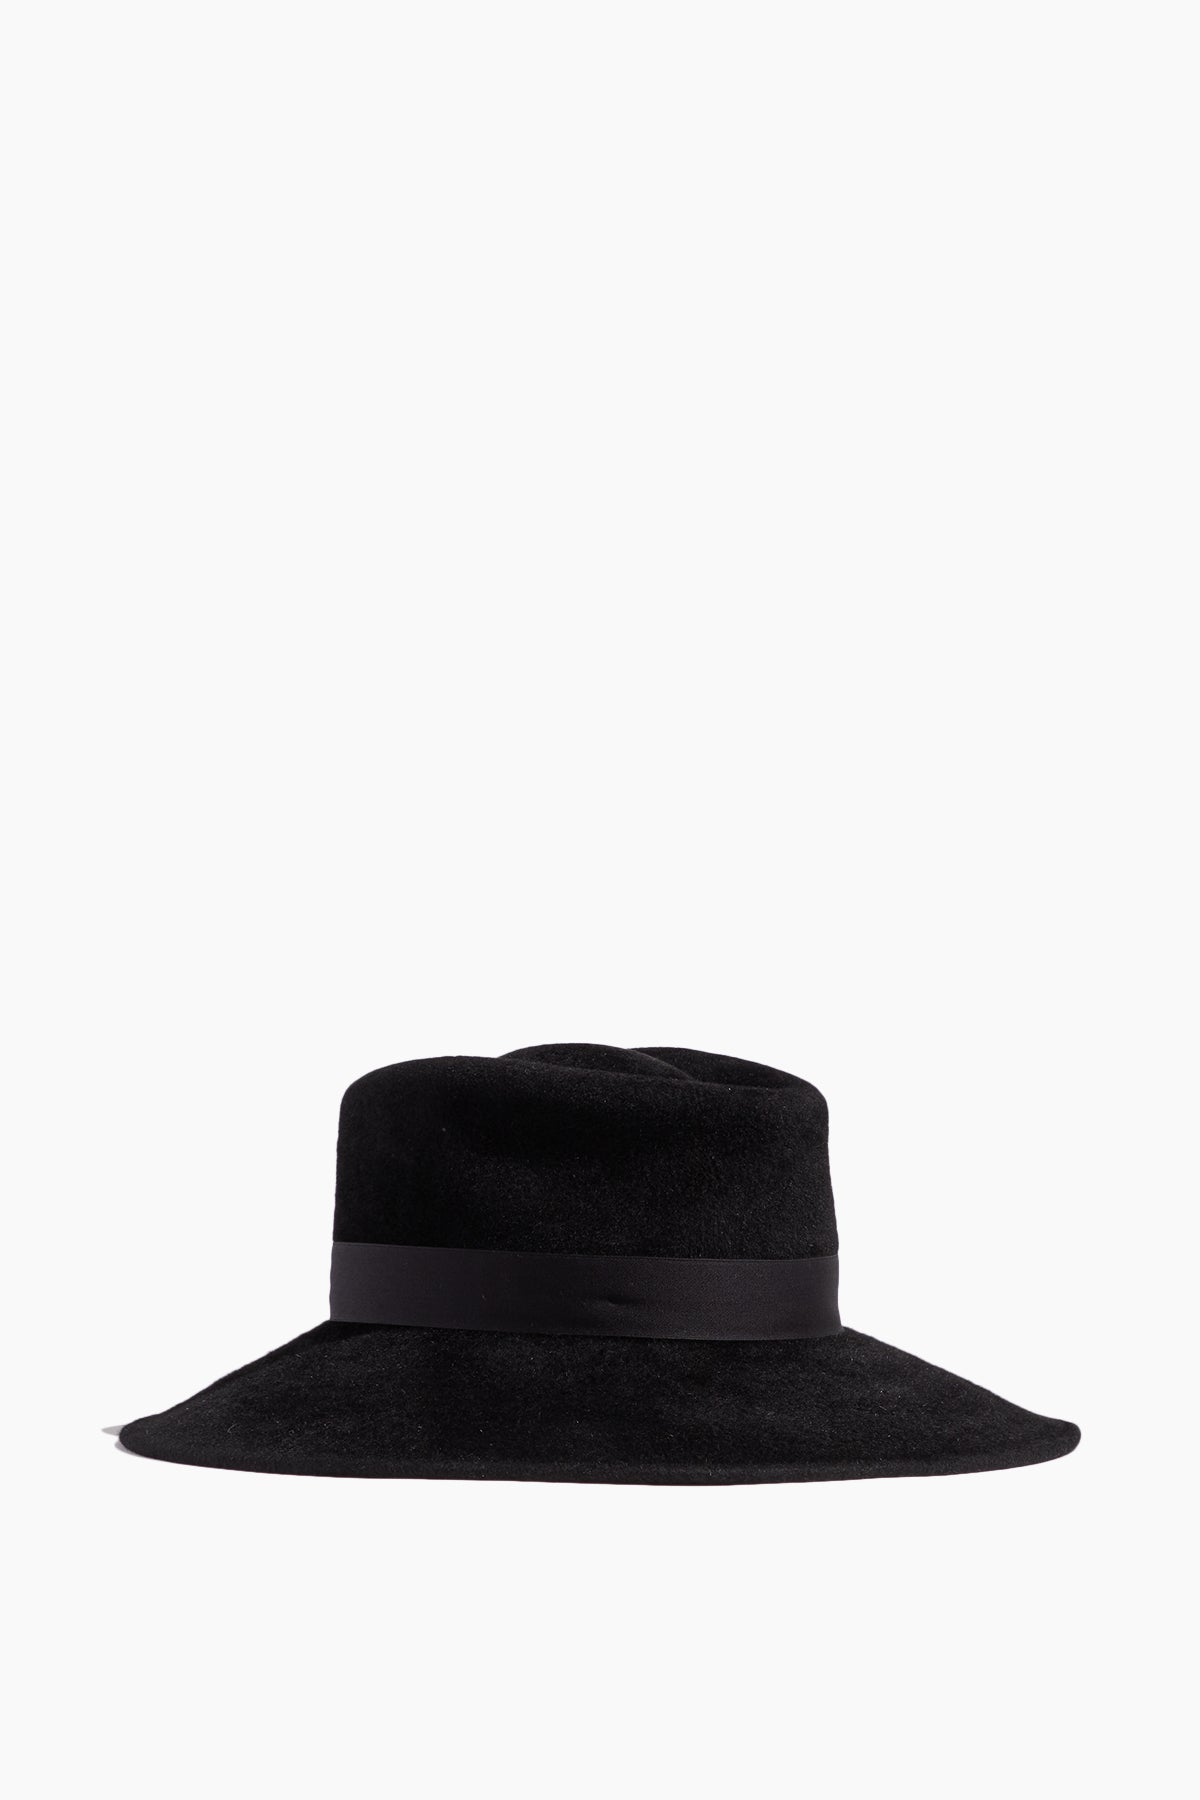 Gigi Burris Hats Merle Hat in Black/Tonal